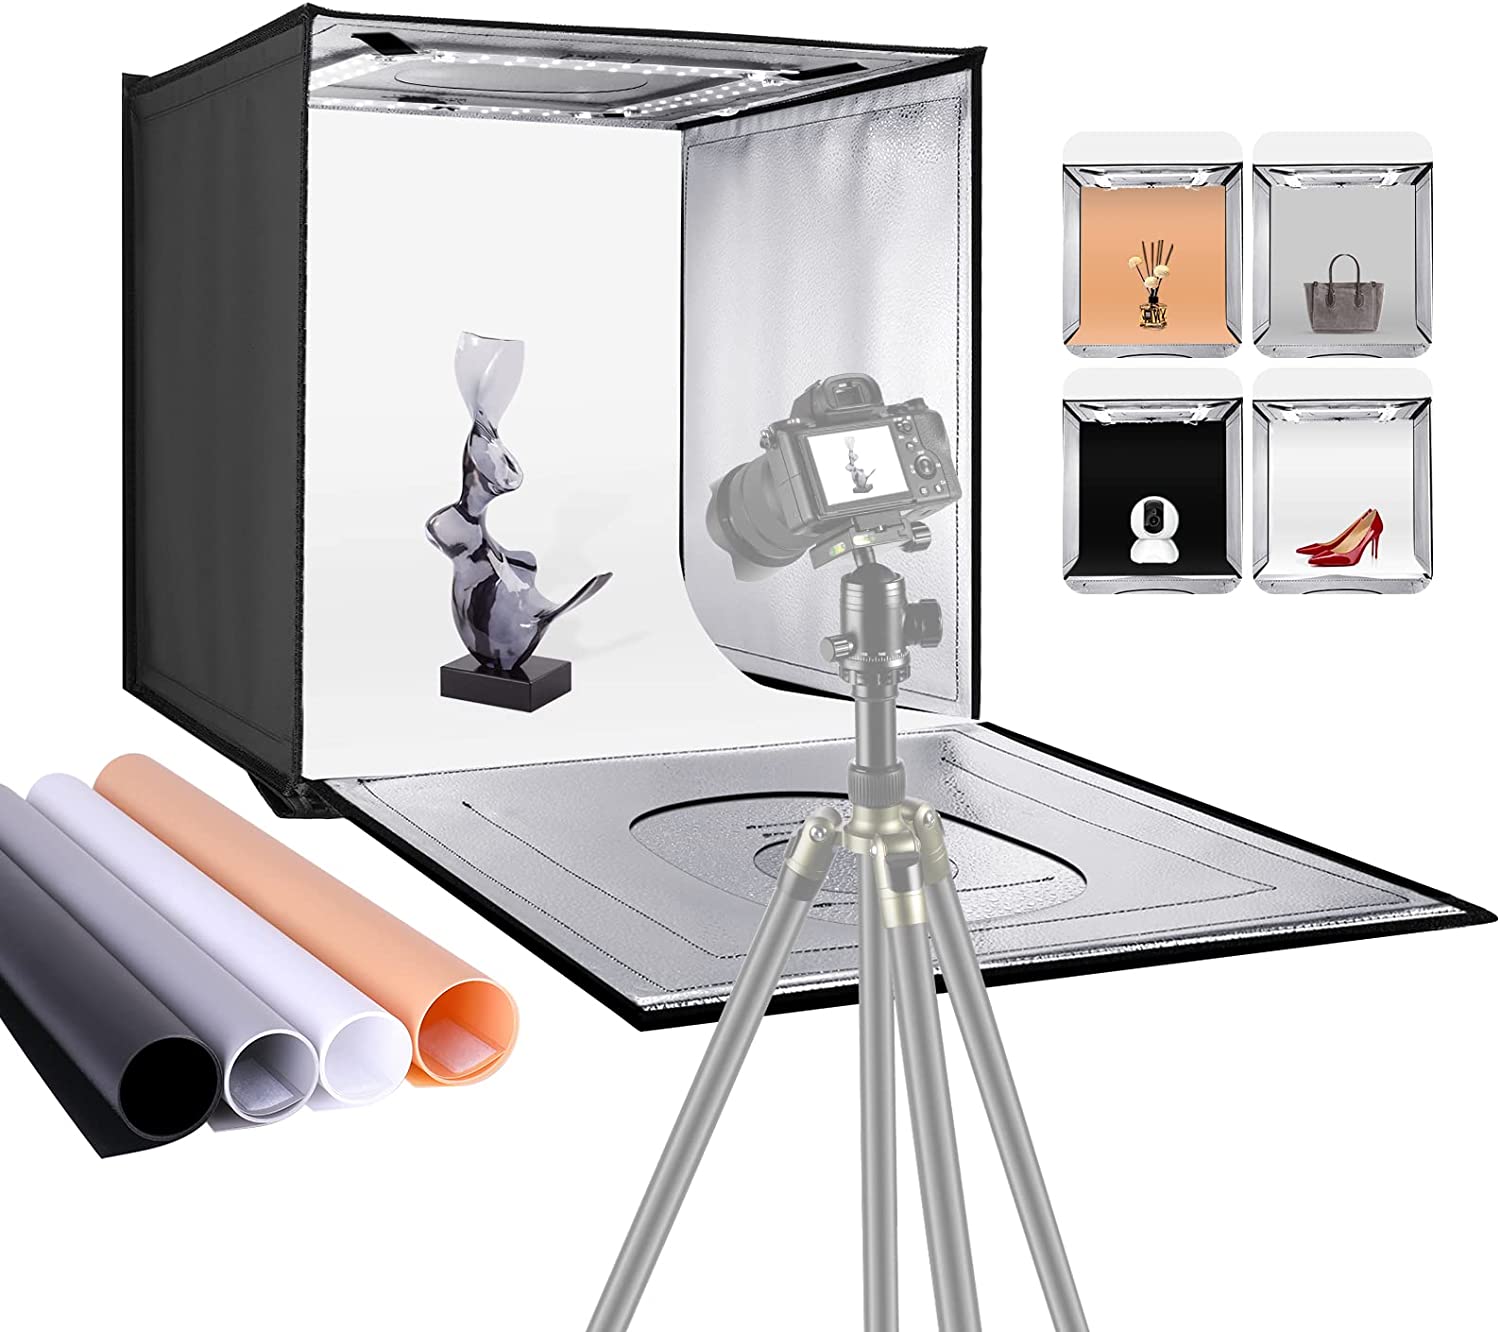 20" Neewer Portable Photo Studio Adjustable LED Light Box $59.80 + Free Shipping